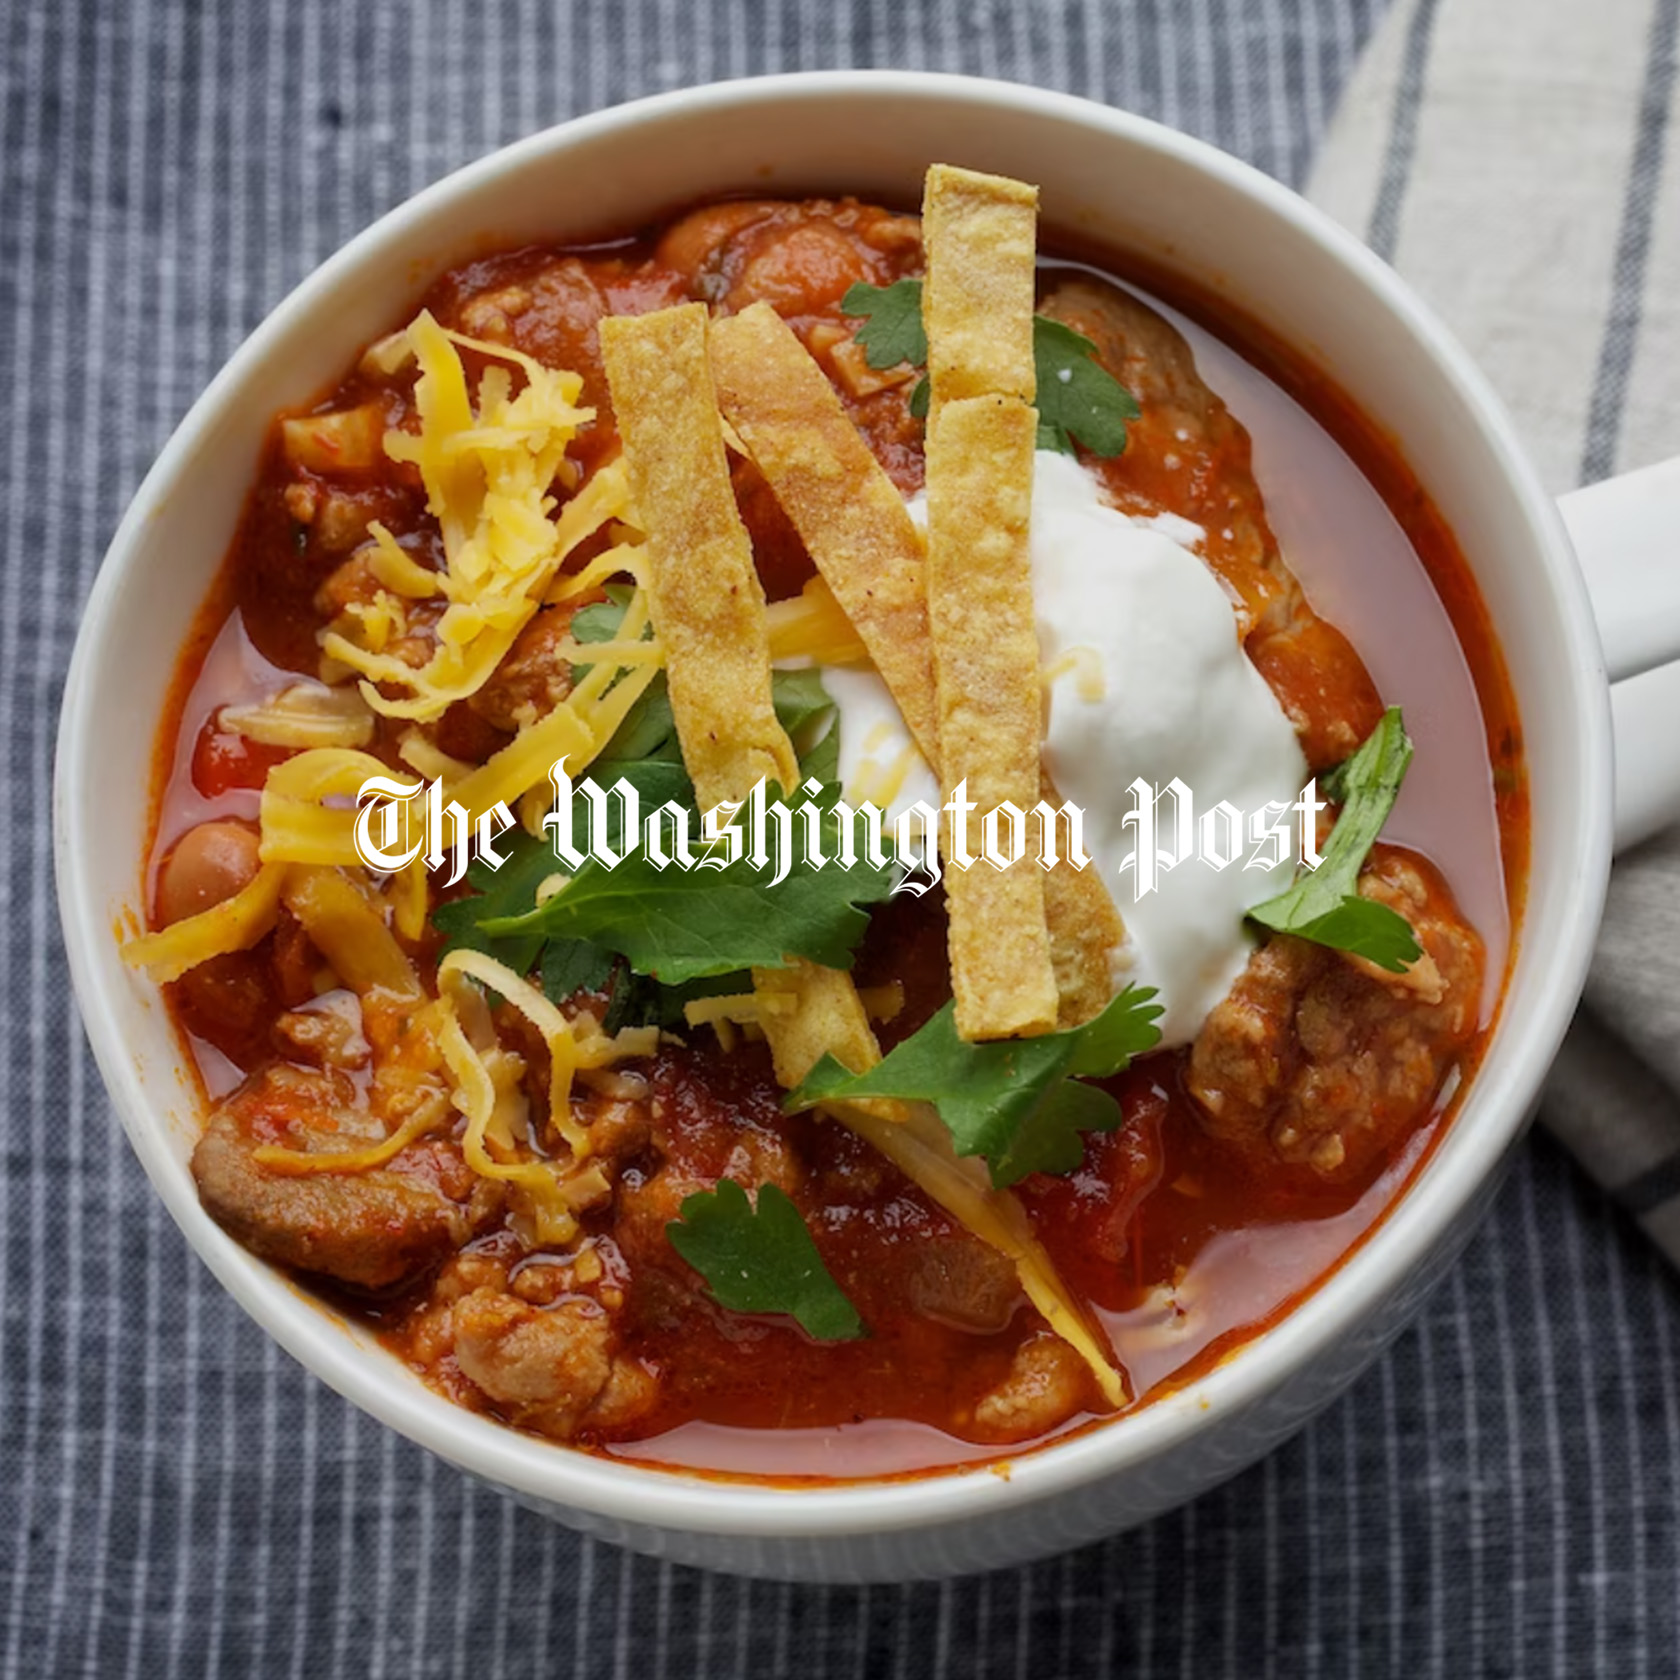 Washington Post "Tex-Mex Cooking"